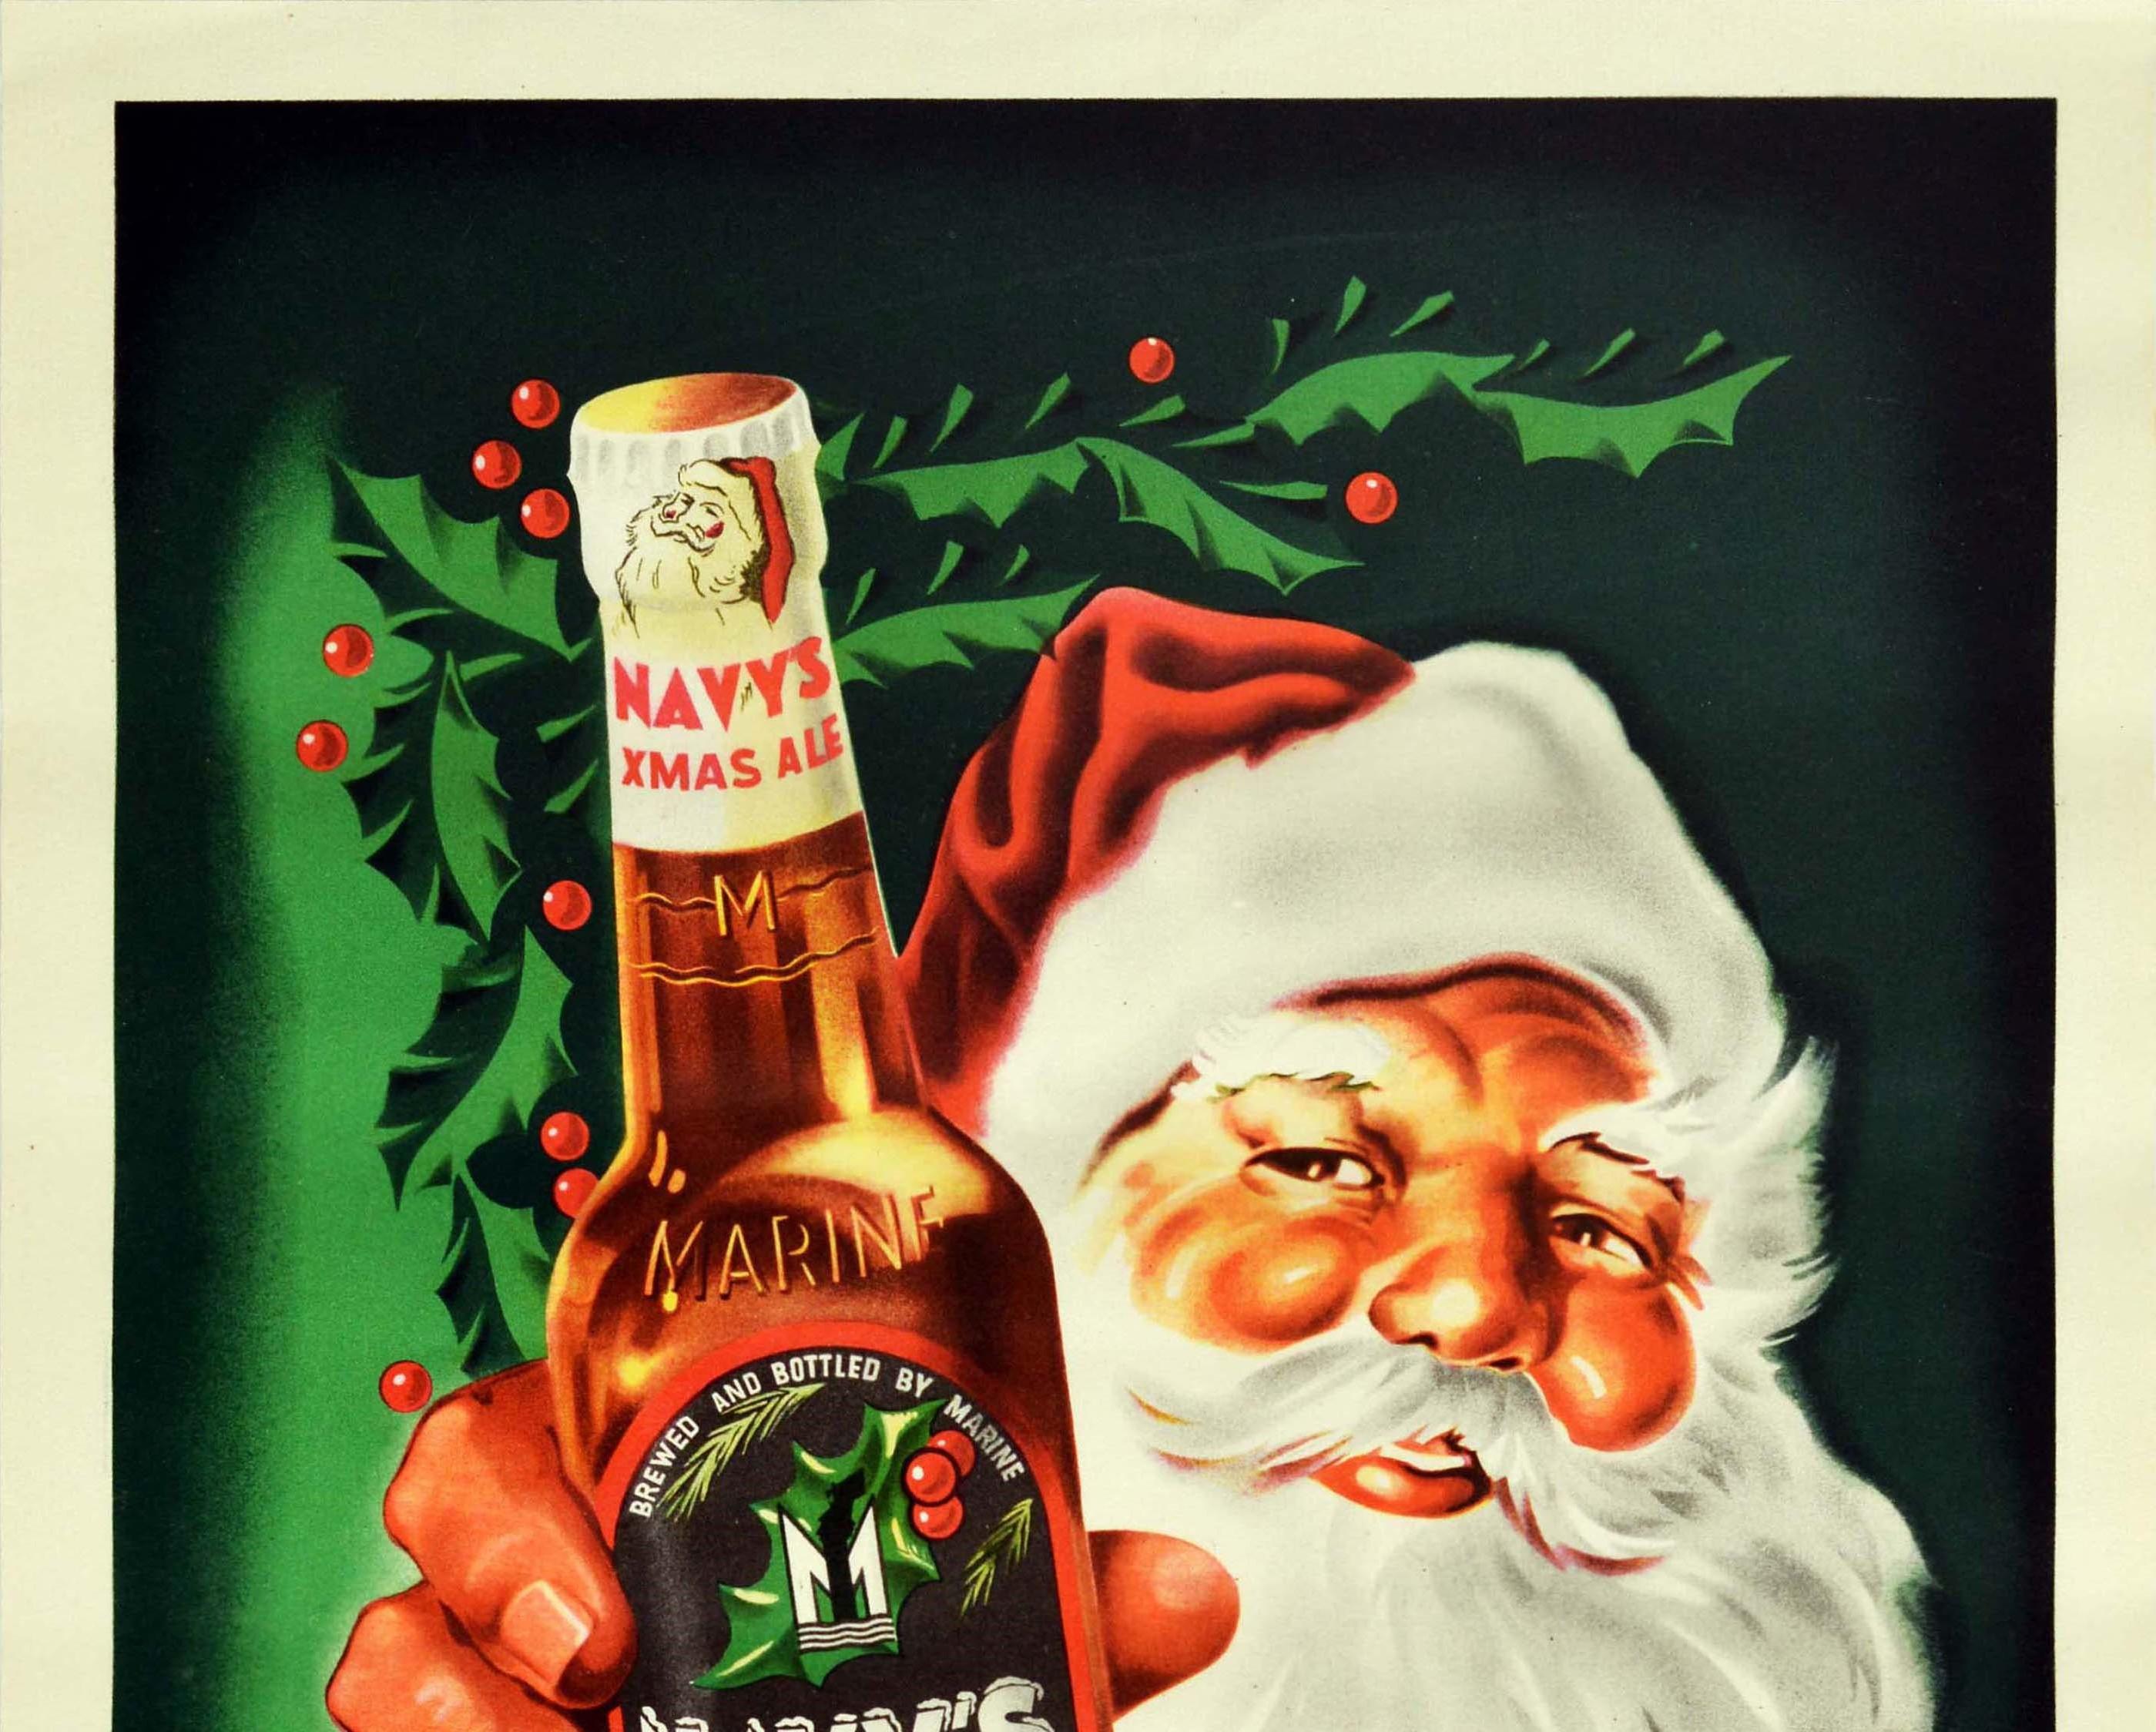 Original Vintage Drink Advertising Poster Navy's Christmas Ale Santa Claus Beer - Print by Unknown